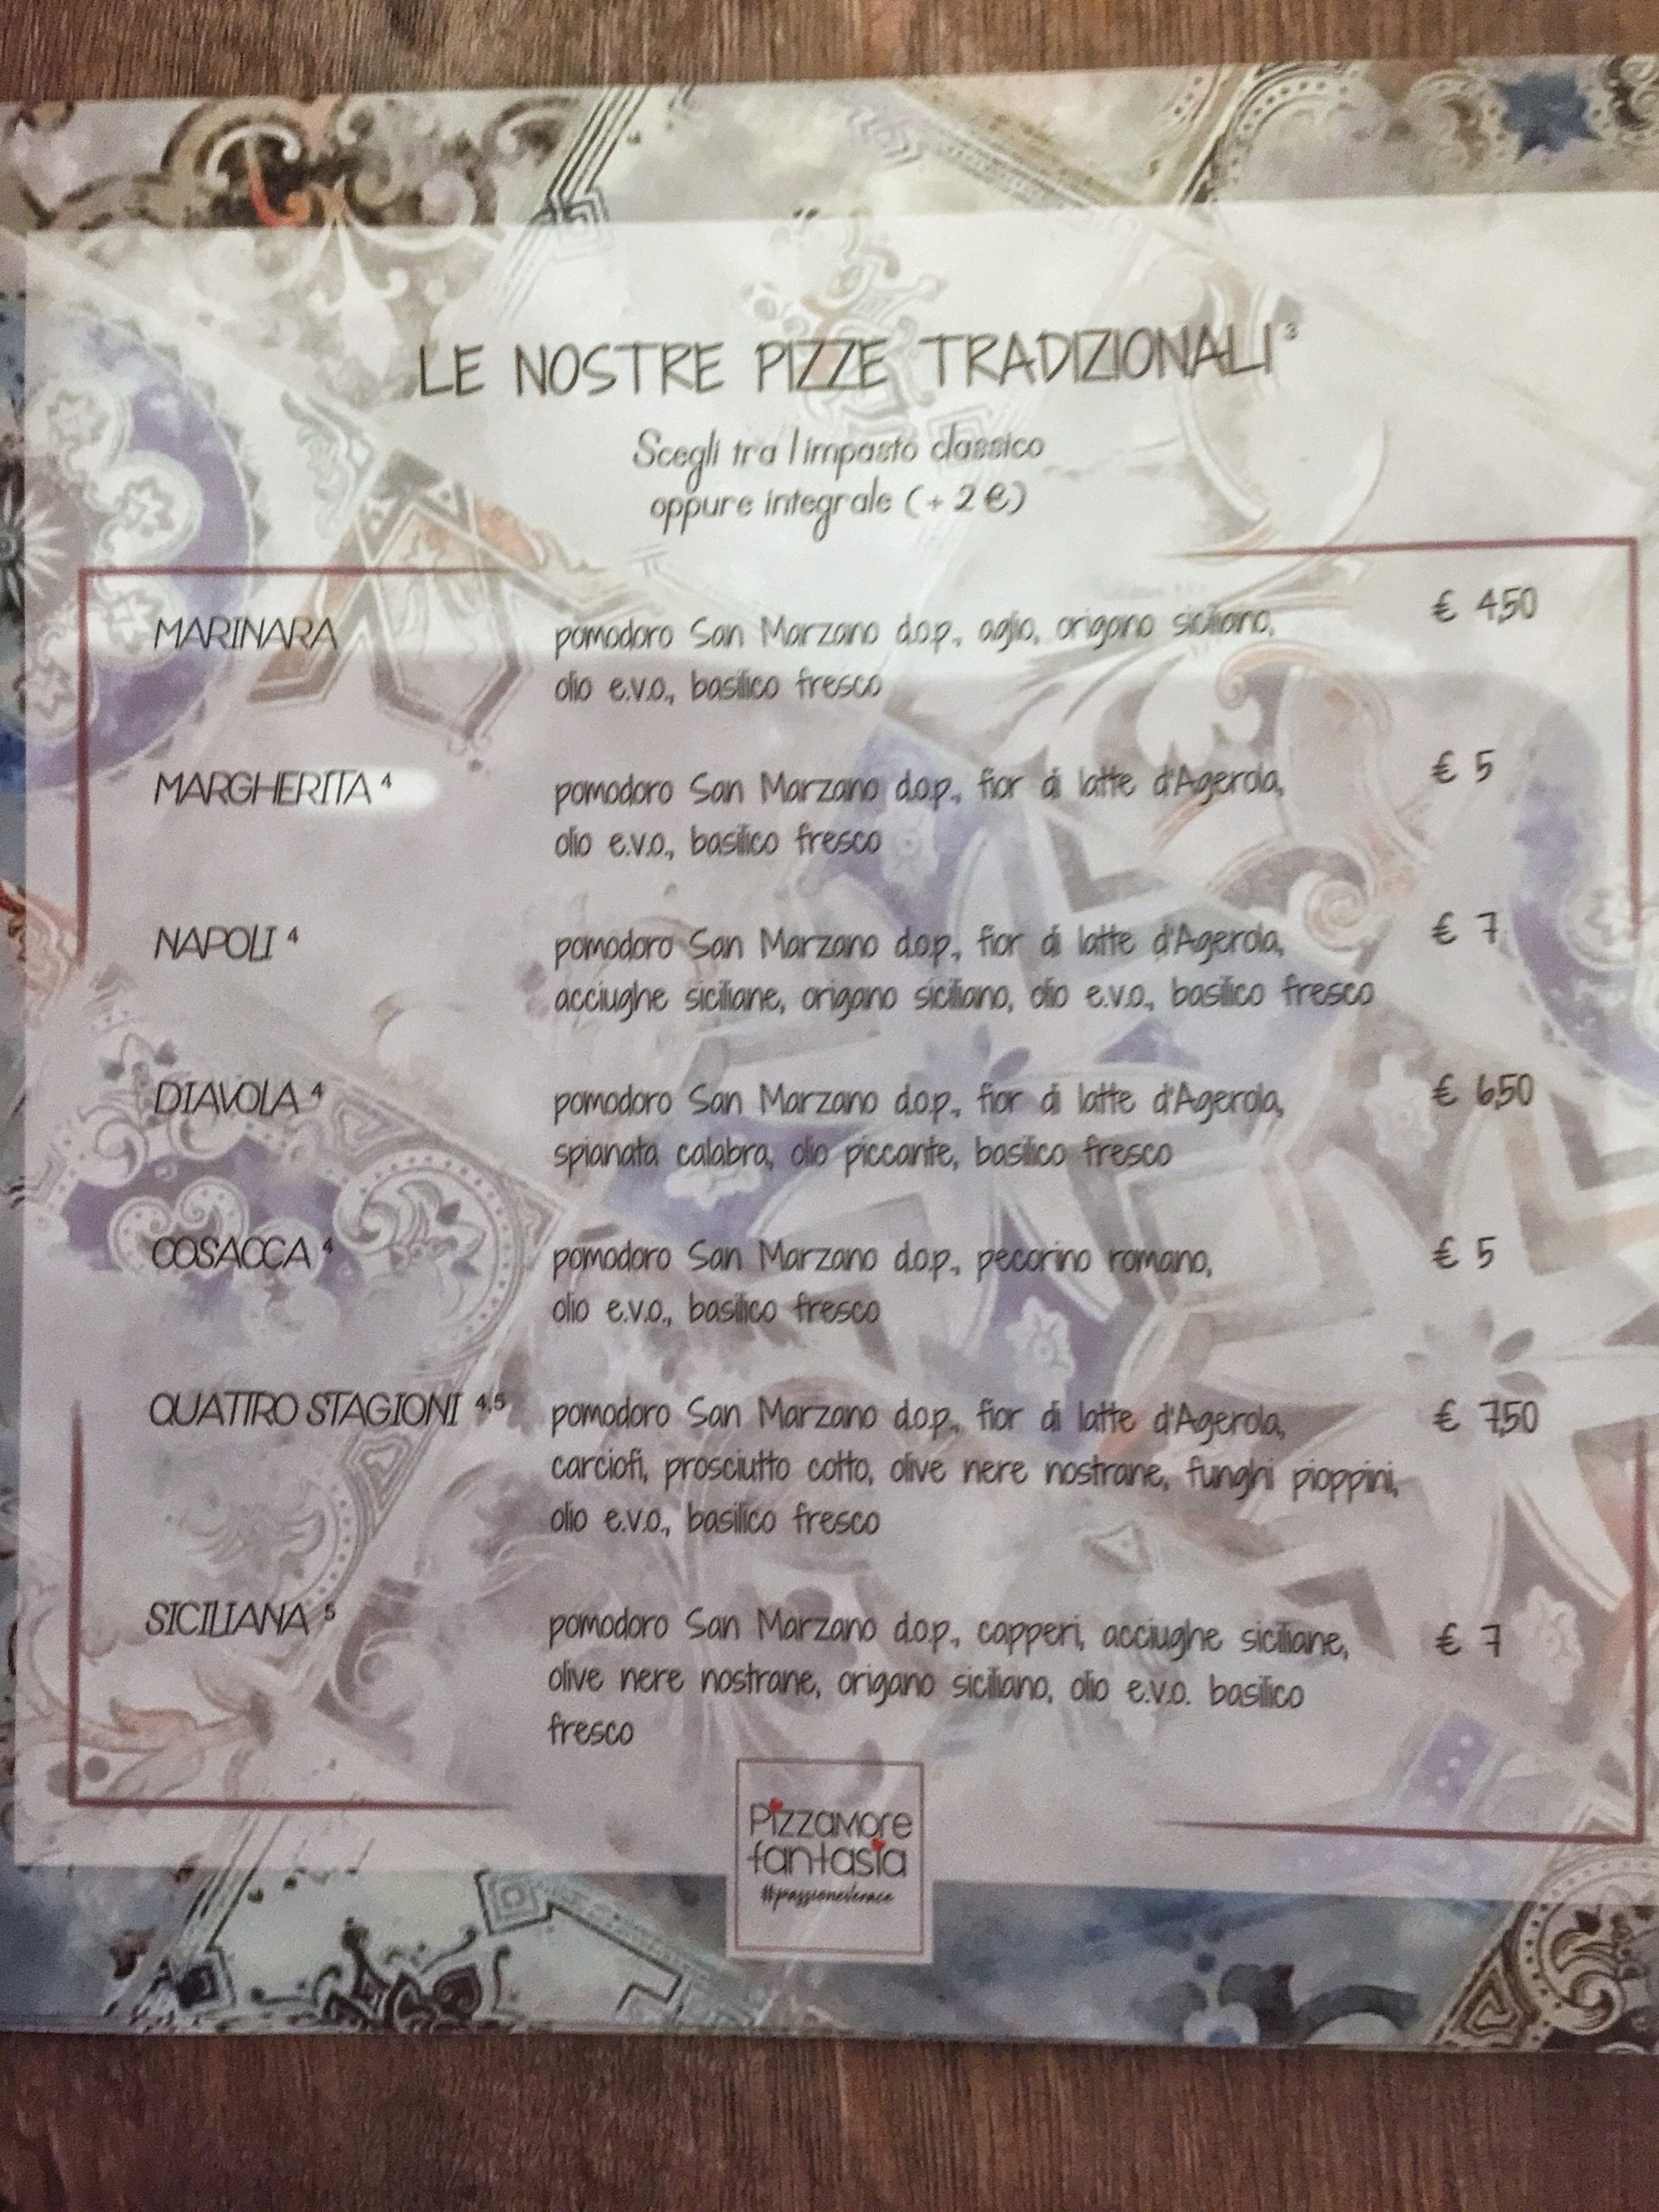 Pizzamorefantasia a Legnano - Menu Pizze Tradizionali